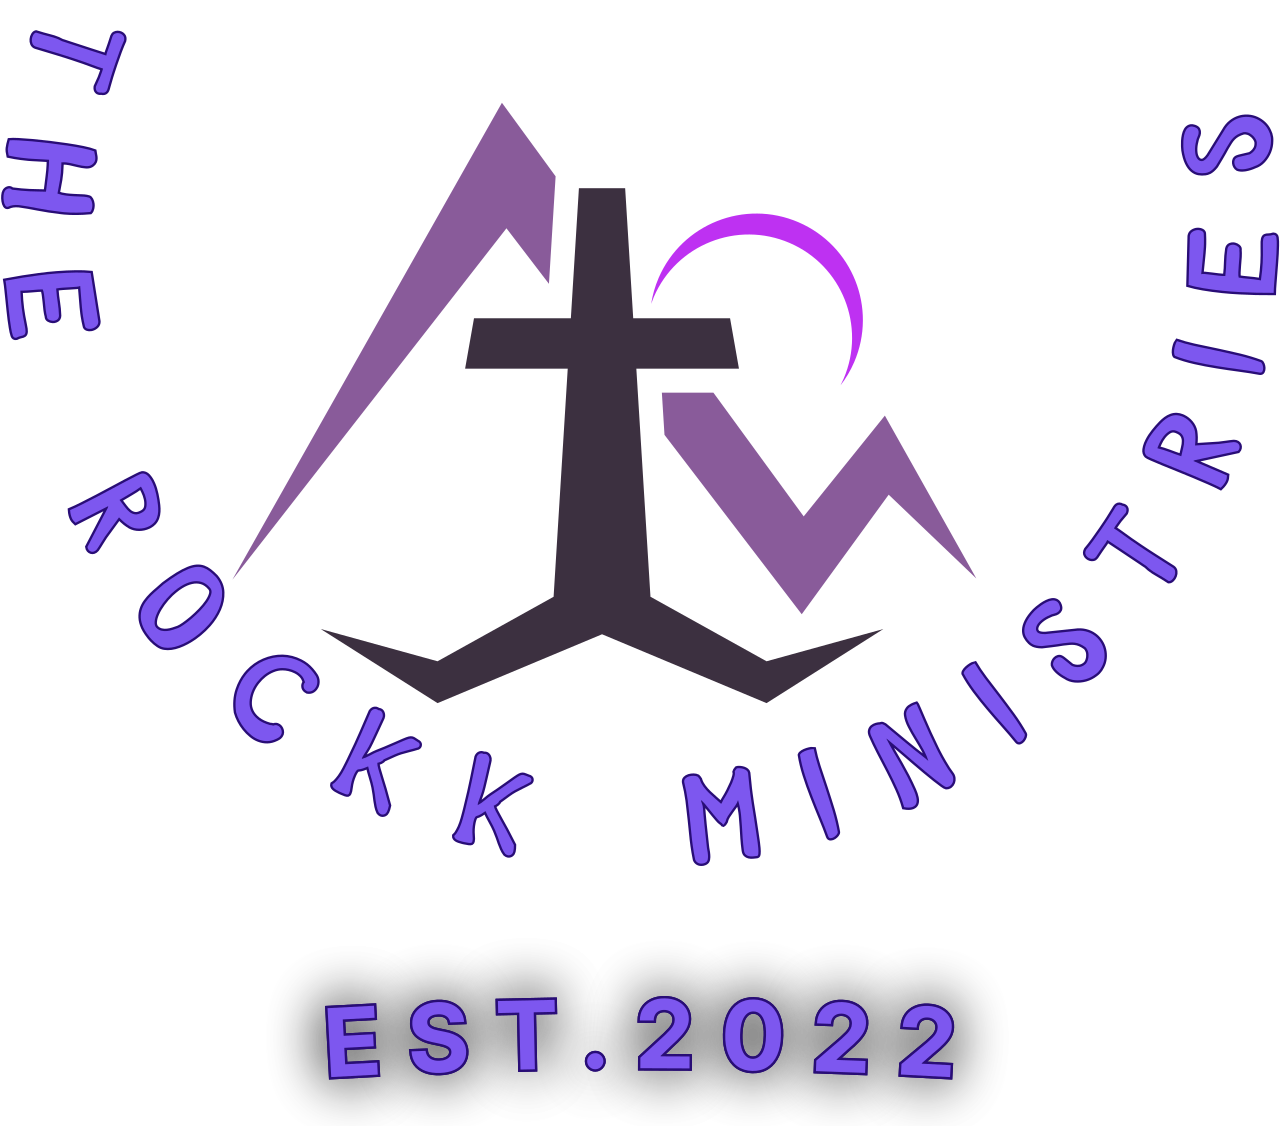 THE ROCKK MINISTRIES 's web page